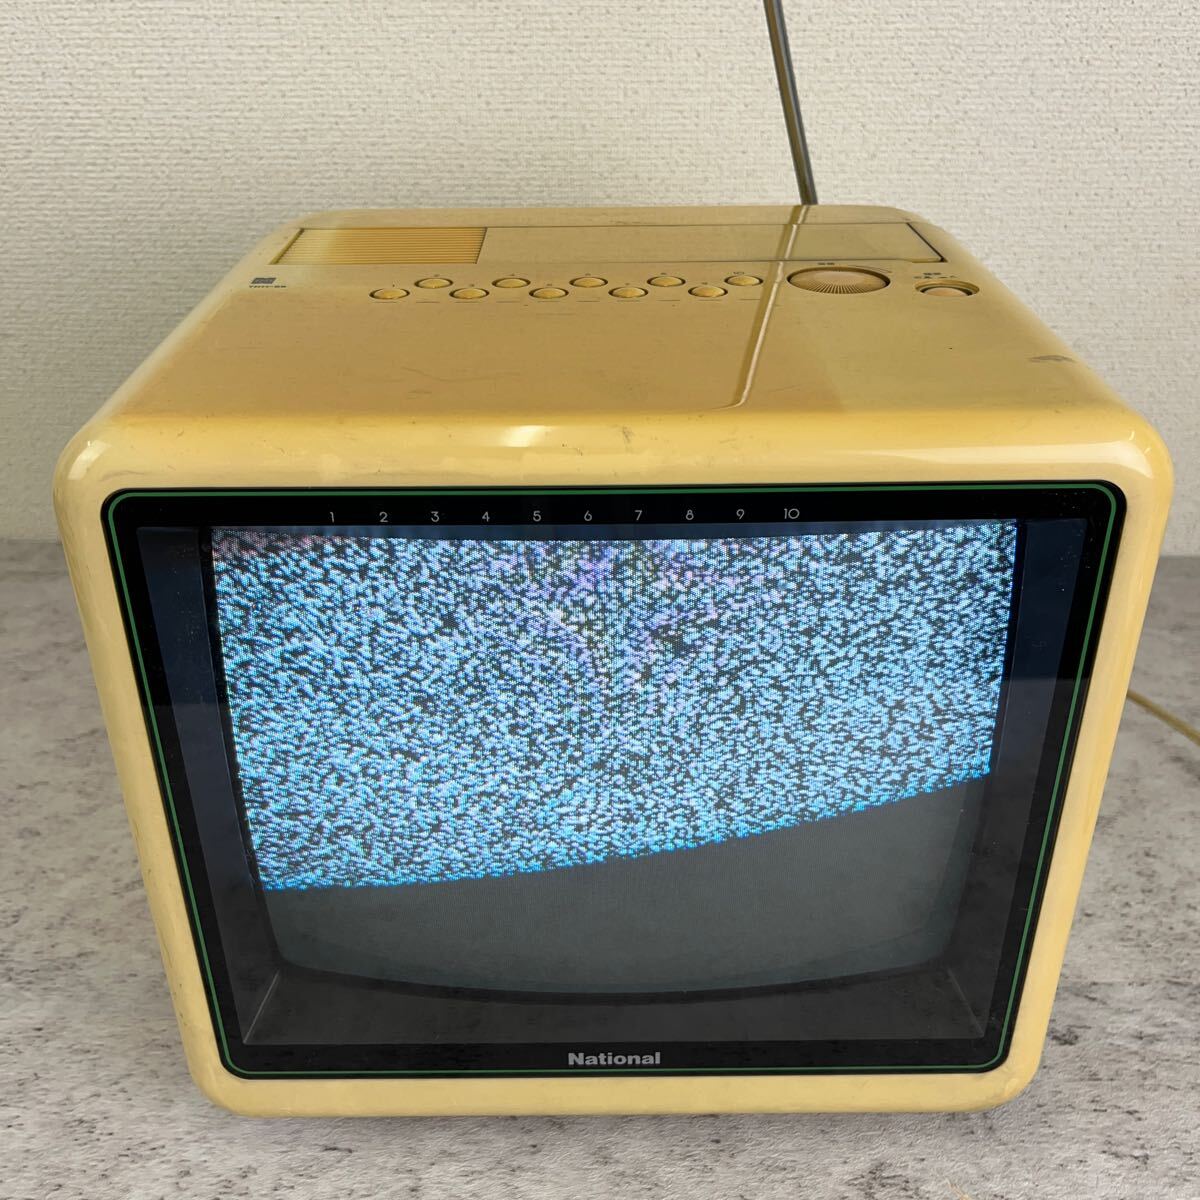 National National color tv TH11-S9 electrification has confirmed Showa era consumer electronics retro 